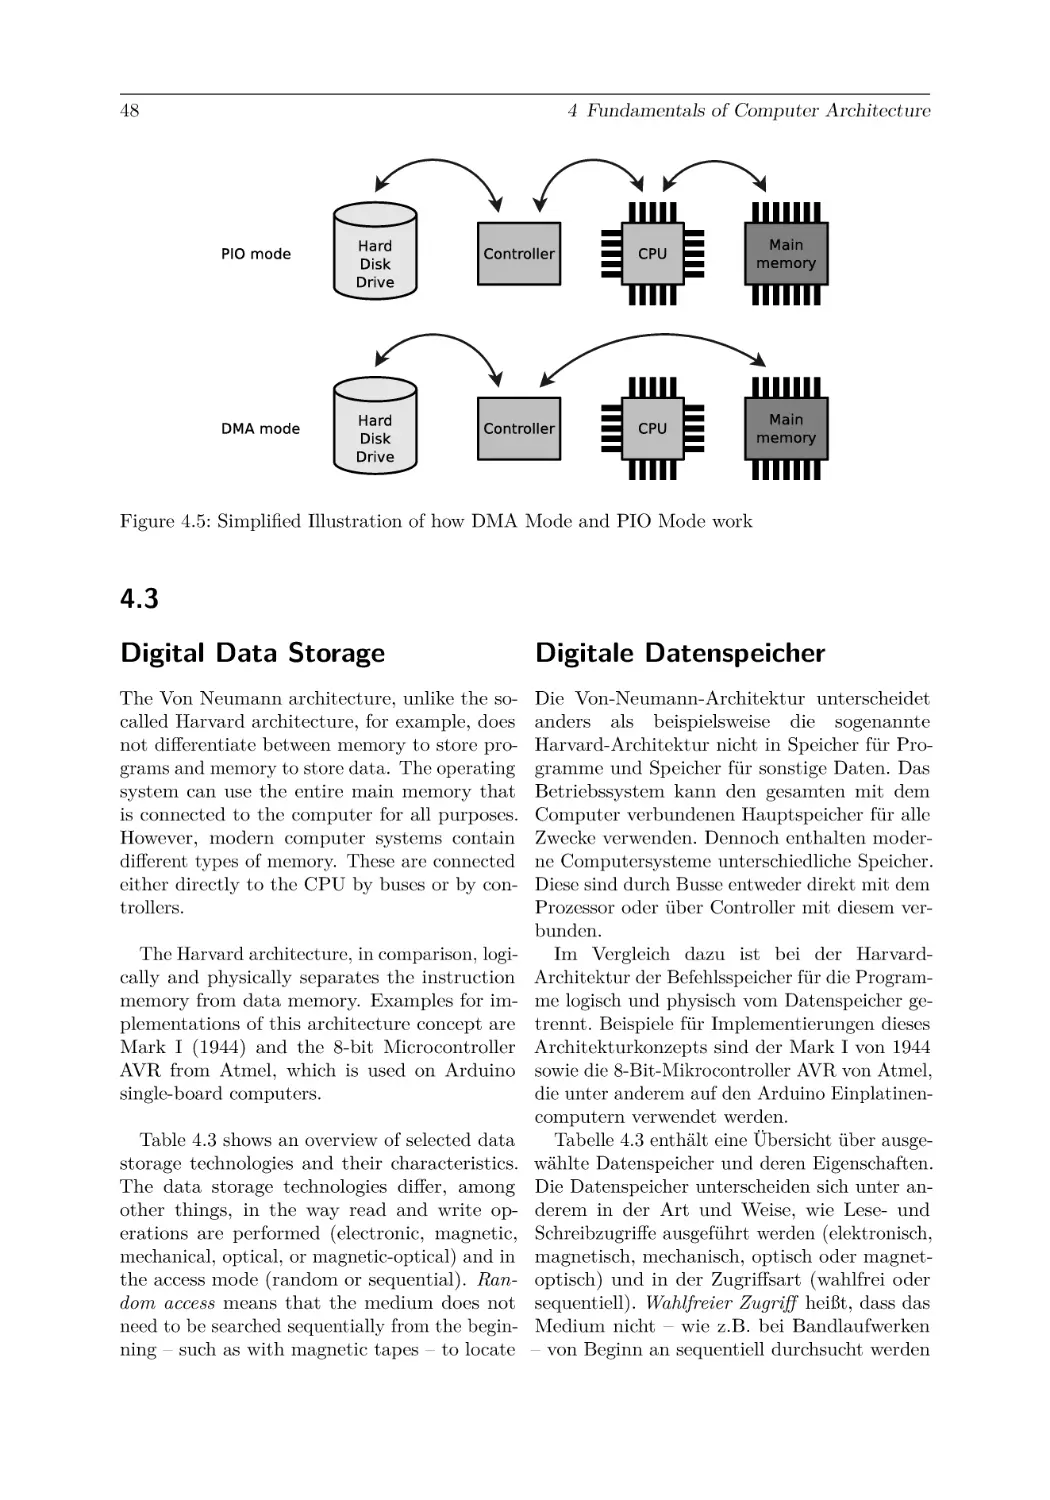 4.3
Digital Data Storage